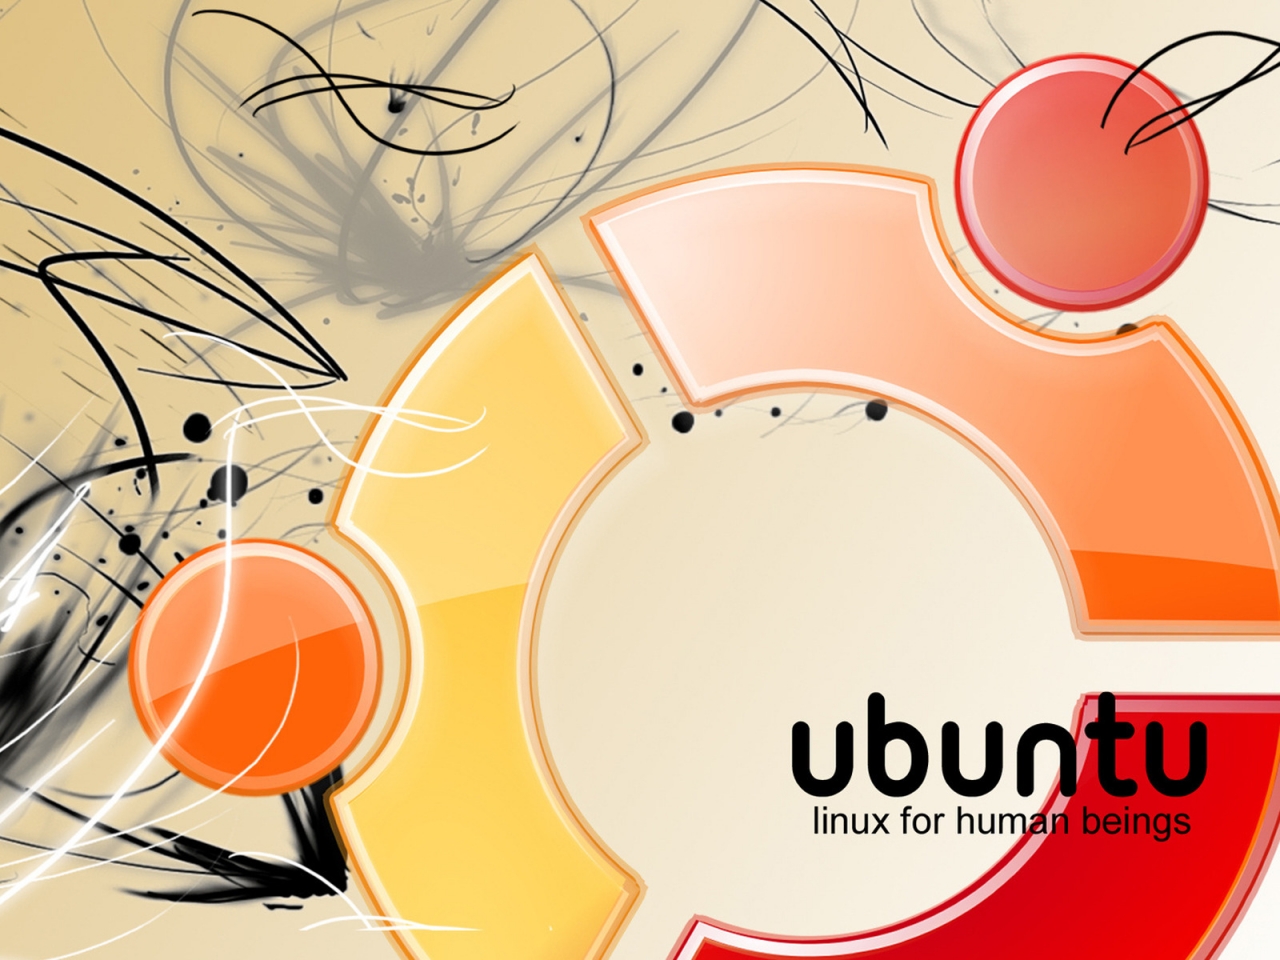 Ubuntu Linux for 1280 x 960 resolution